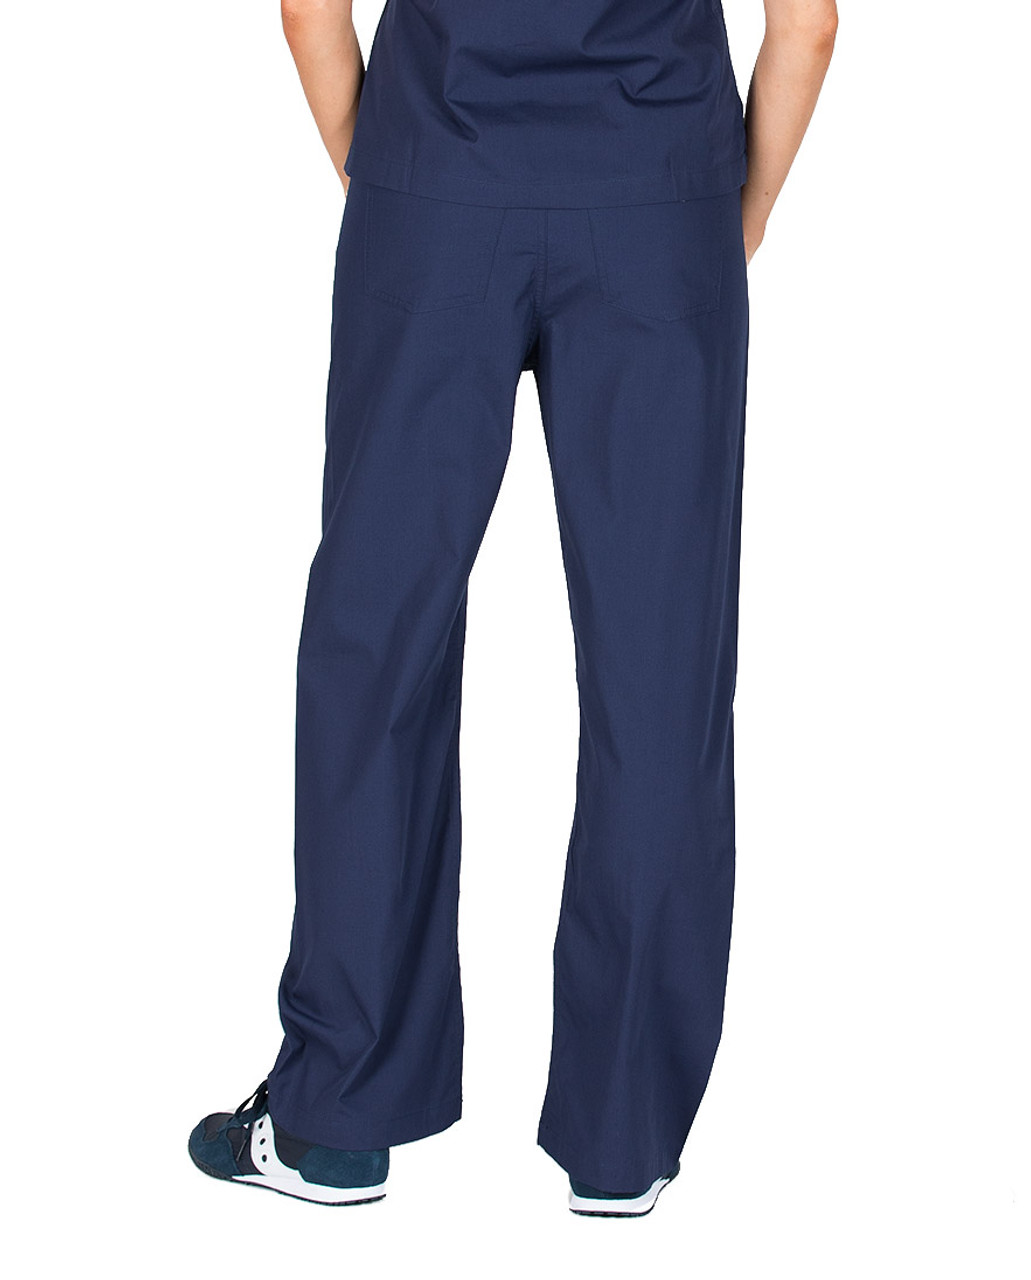 2XL Tall 36 - Navy Blue Classic Simple Scrub Pants